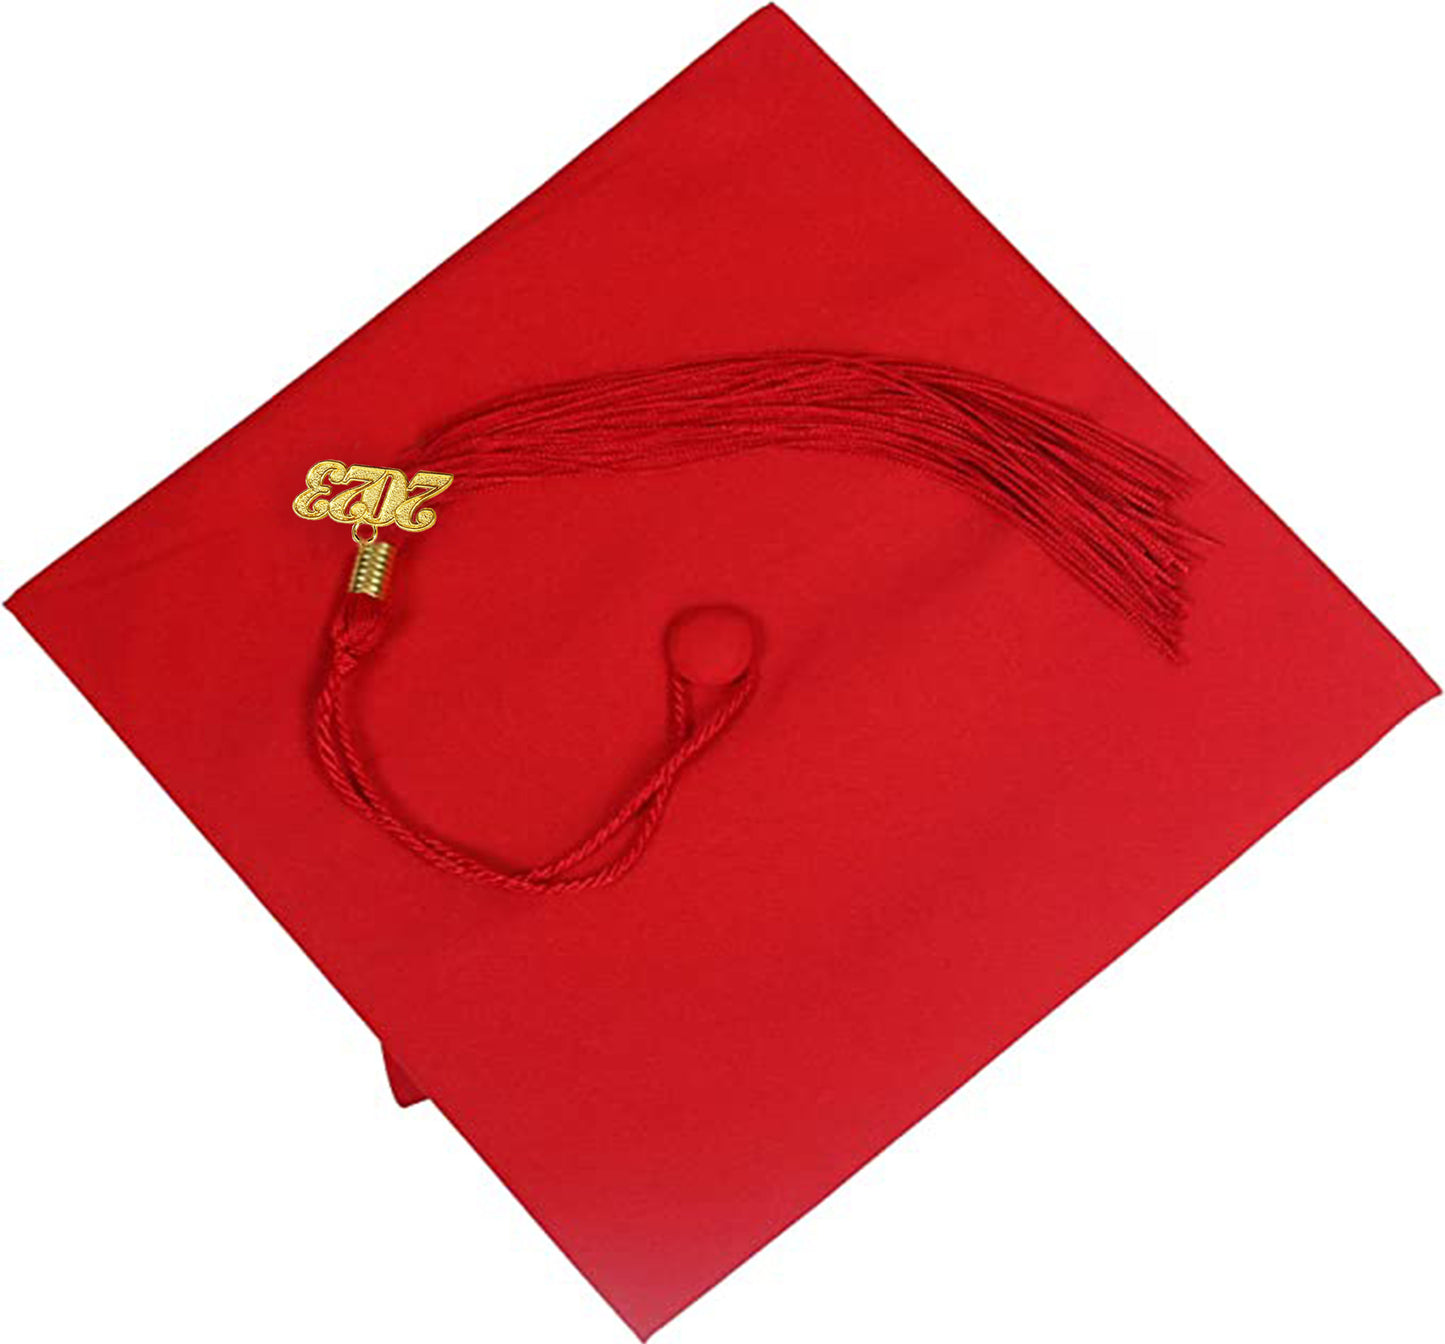 Matte Red Graduation Cap and Tassel